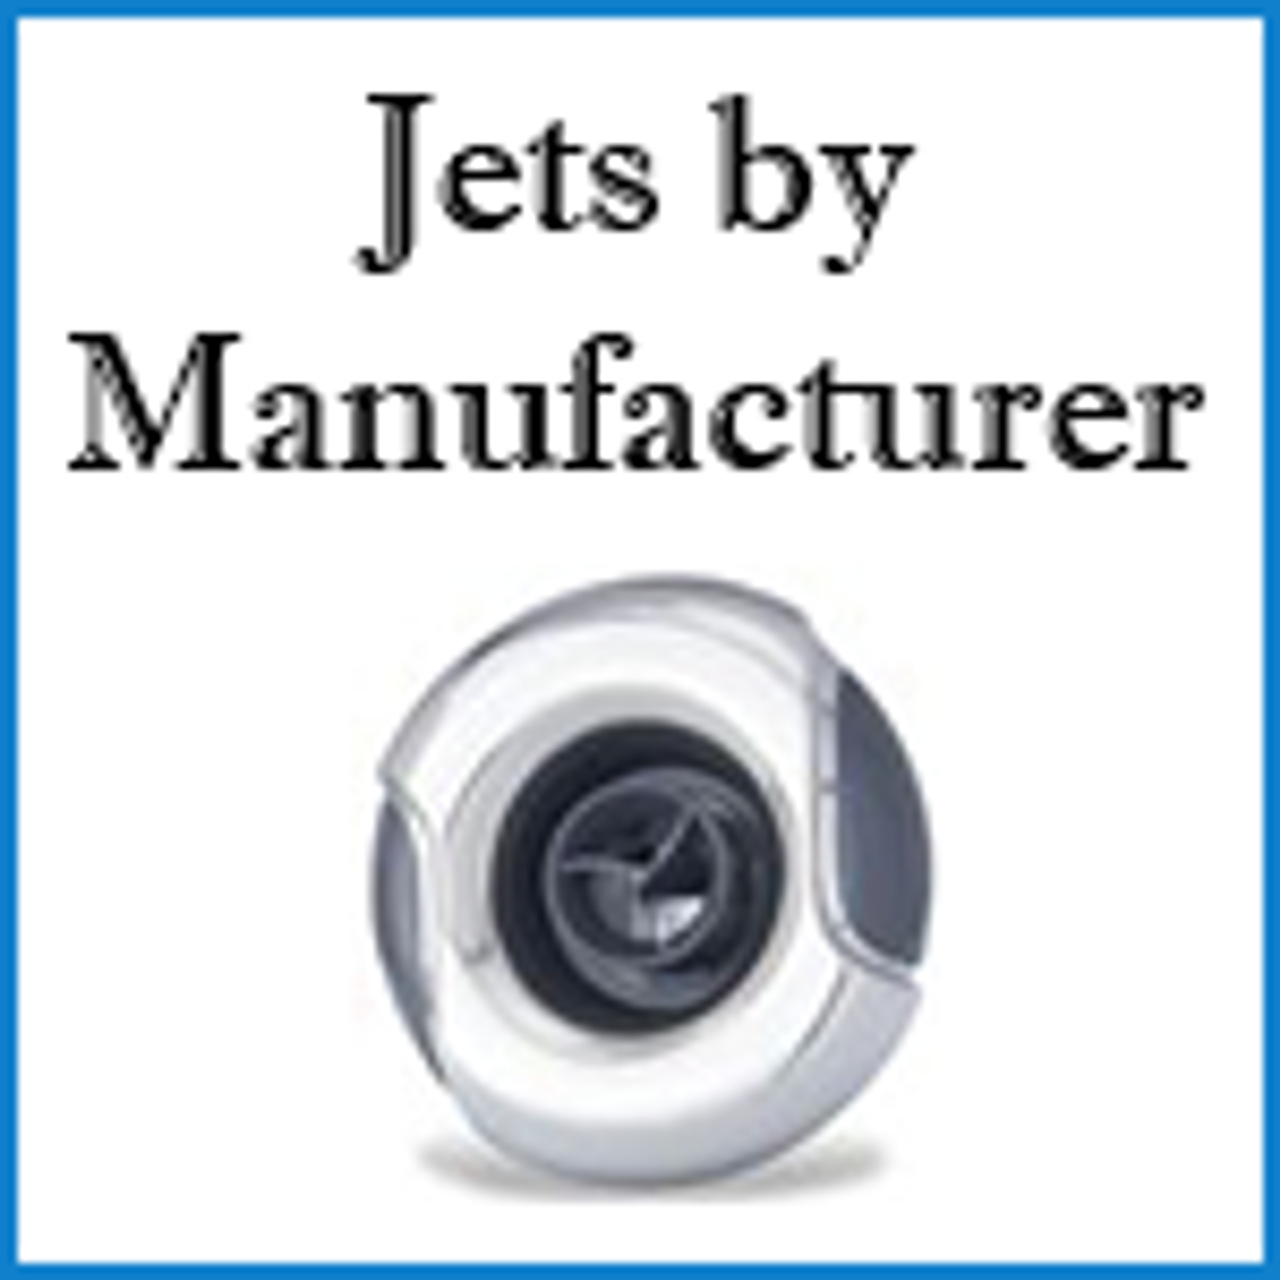 Jets by Manufacturer